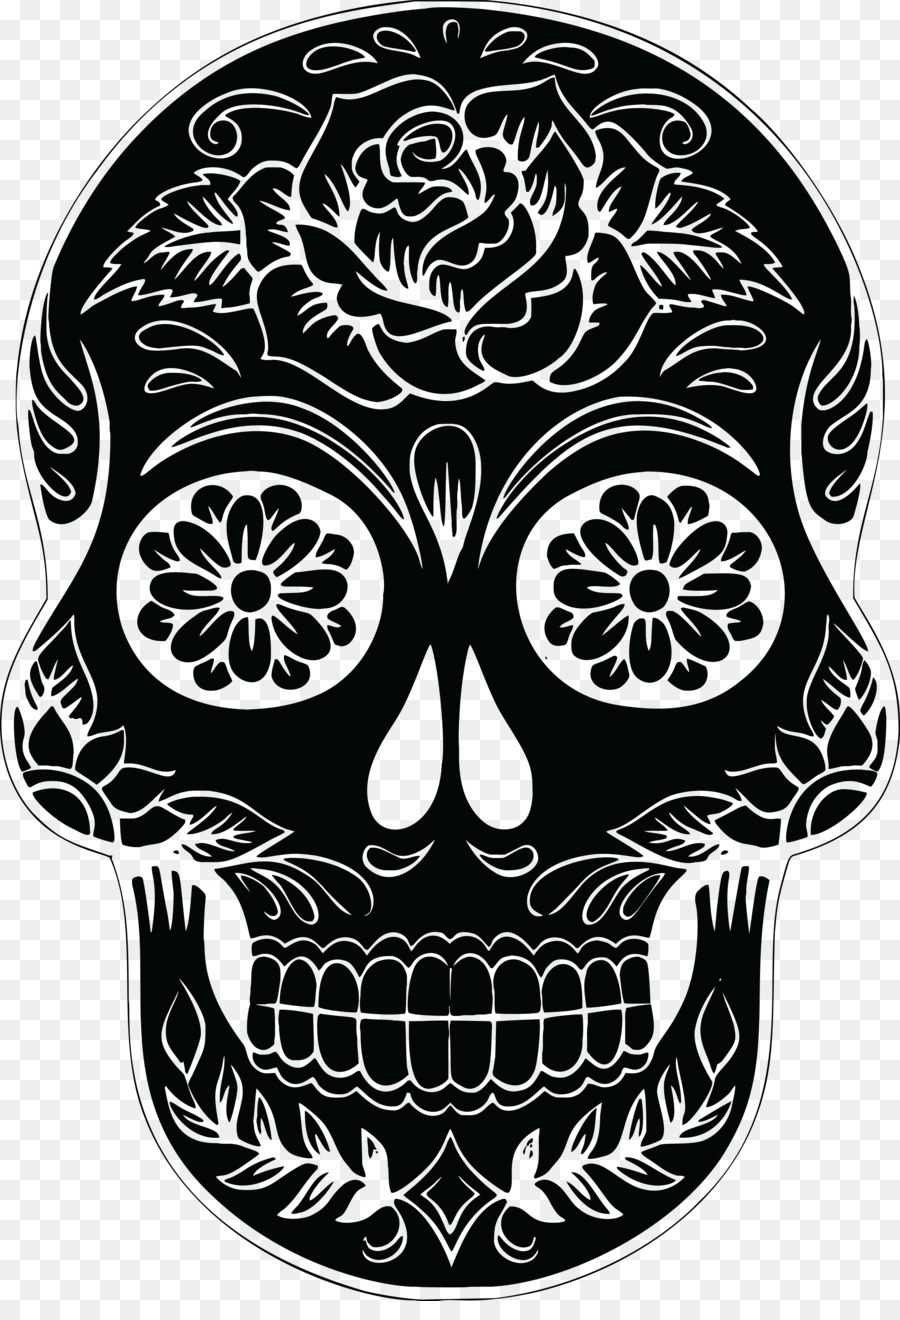 Calavera Skull Day of the Dead Drawing Clip art - sugar png download ...